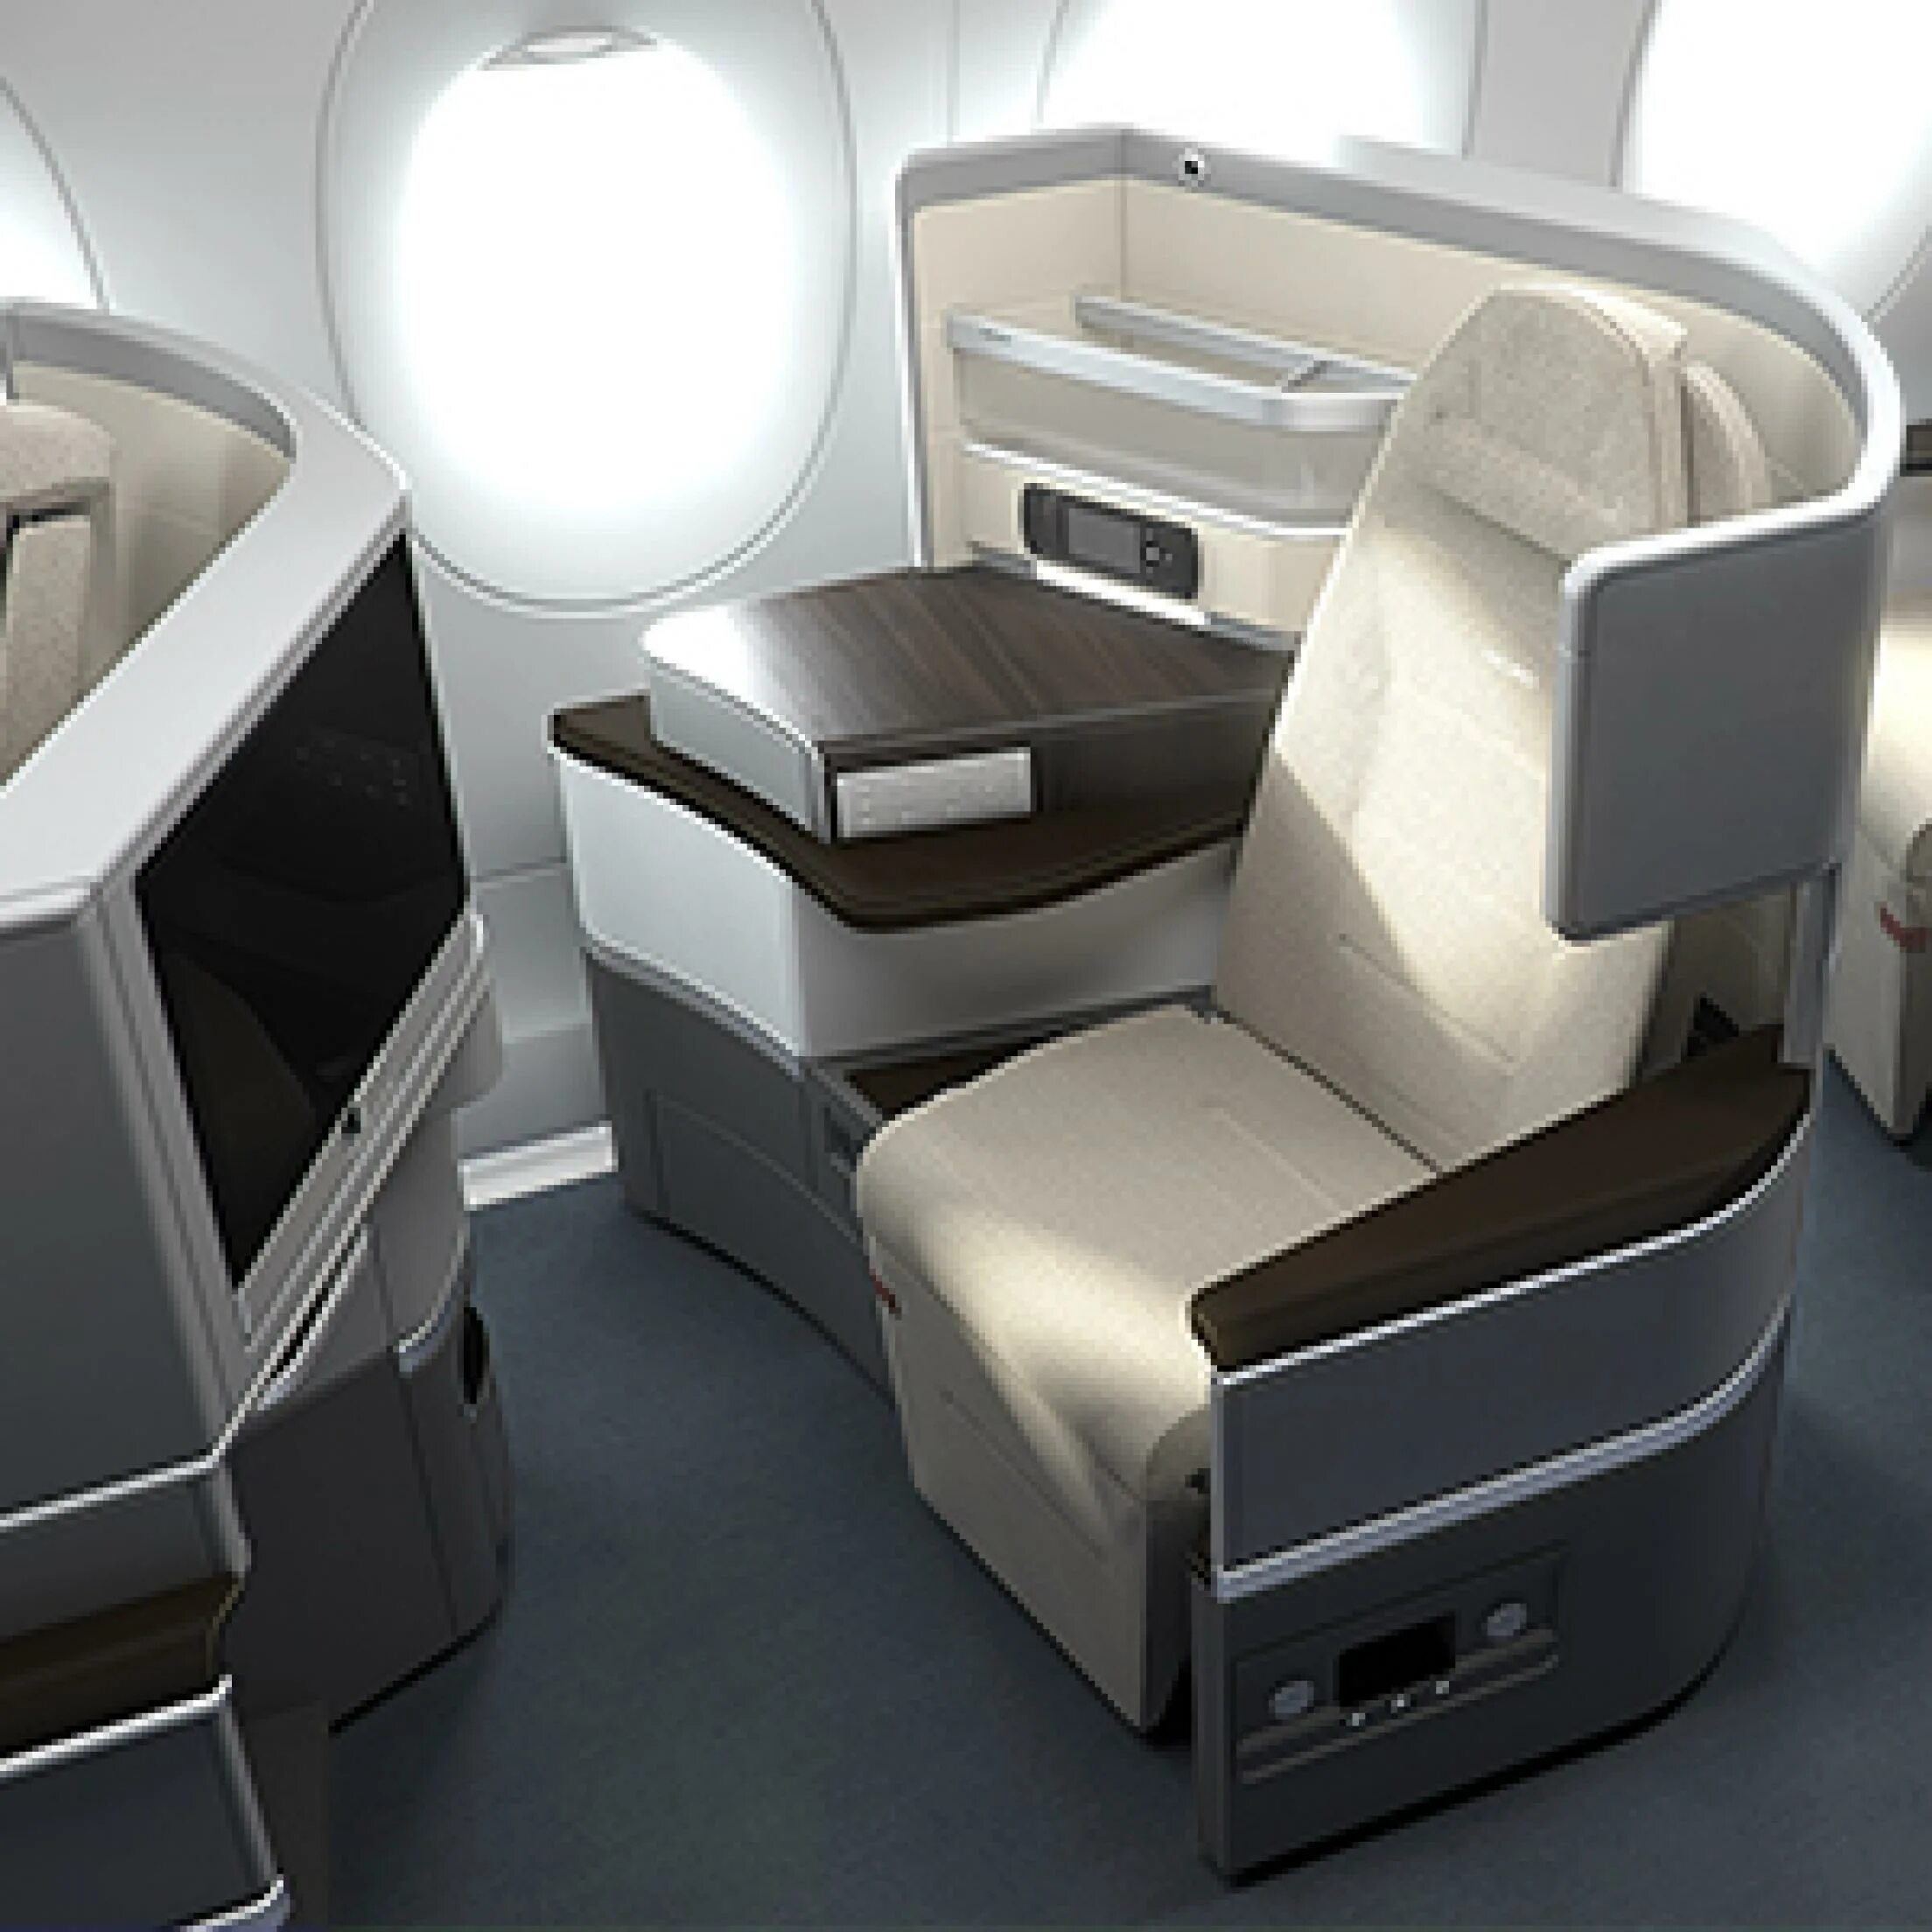 Самолет студия купить. Business class Seats. Recaro Aviation Seat. БМВ Business class. Lufthansa салон бизнес класс.